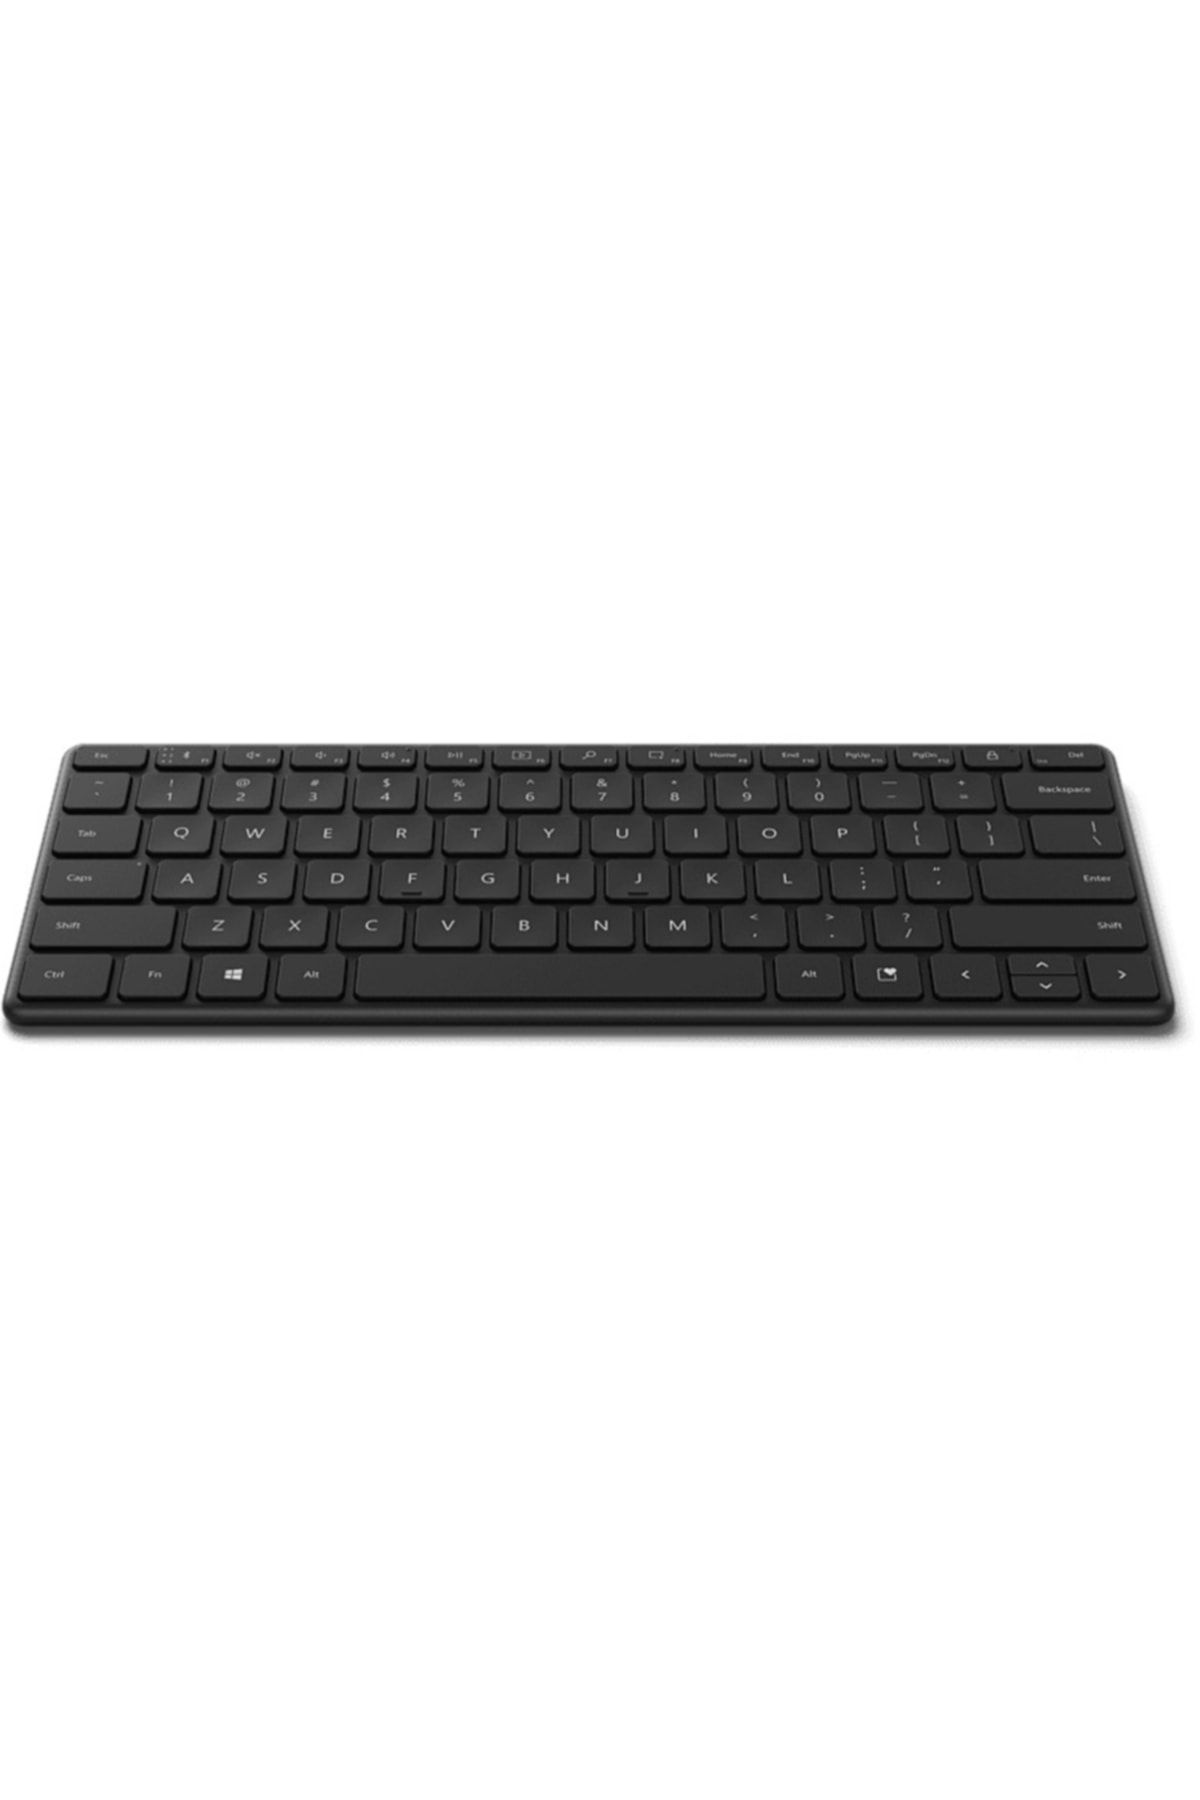 Microsoft 21y-00012 Bluetooth Compact Klavye Siyah